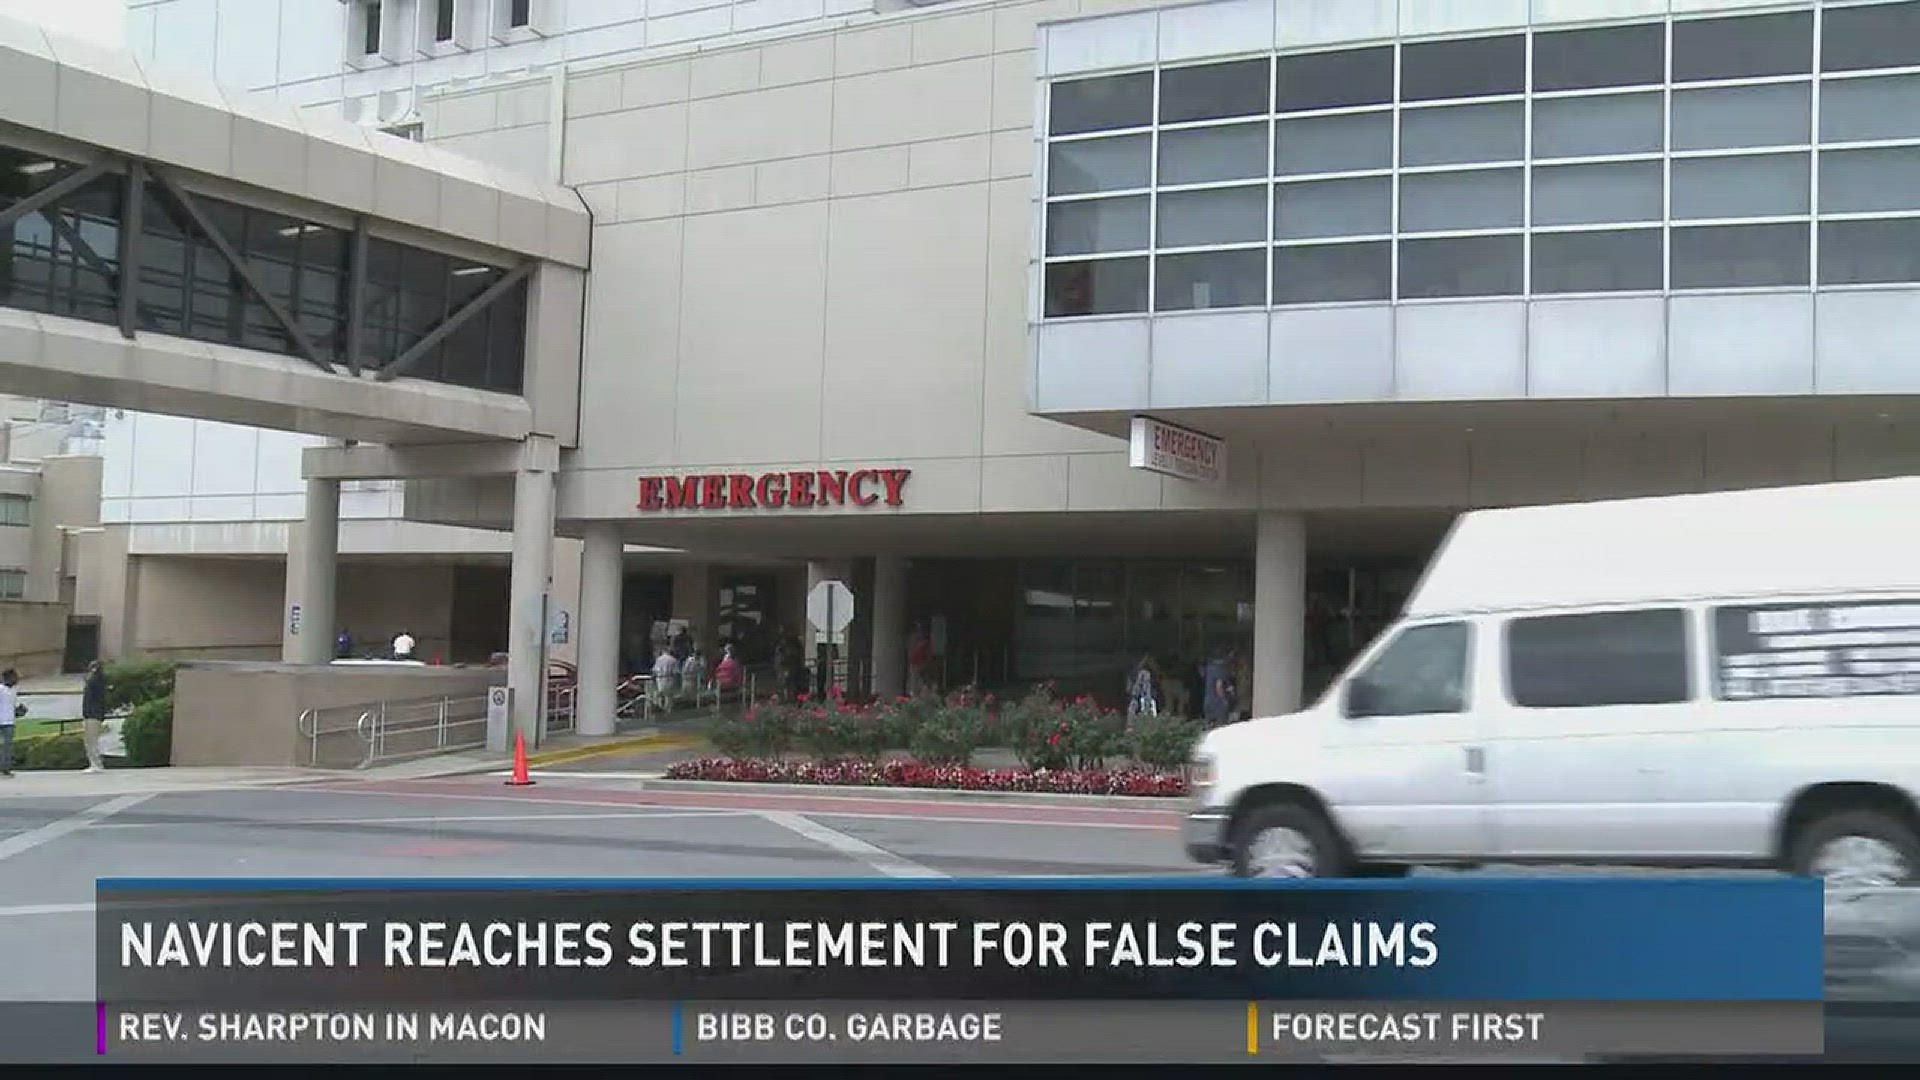 Navicent reaches settlement for false claims